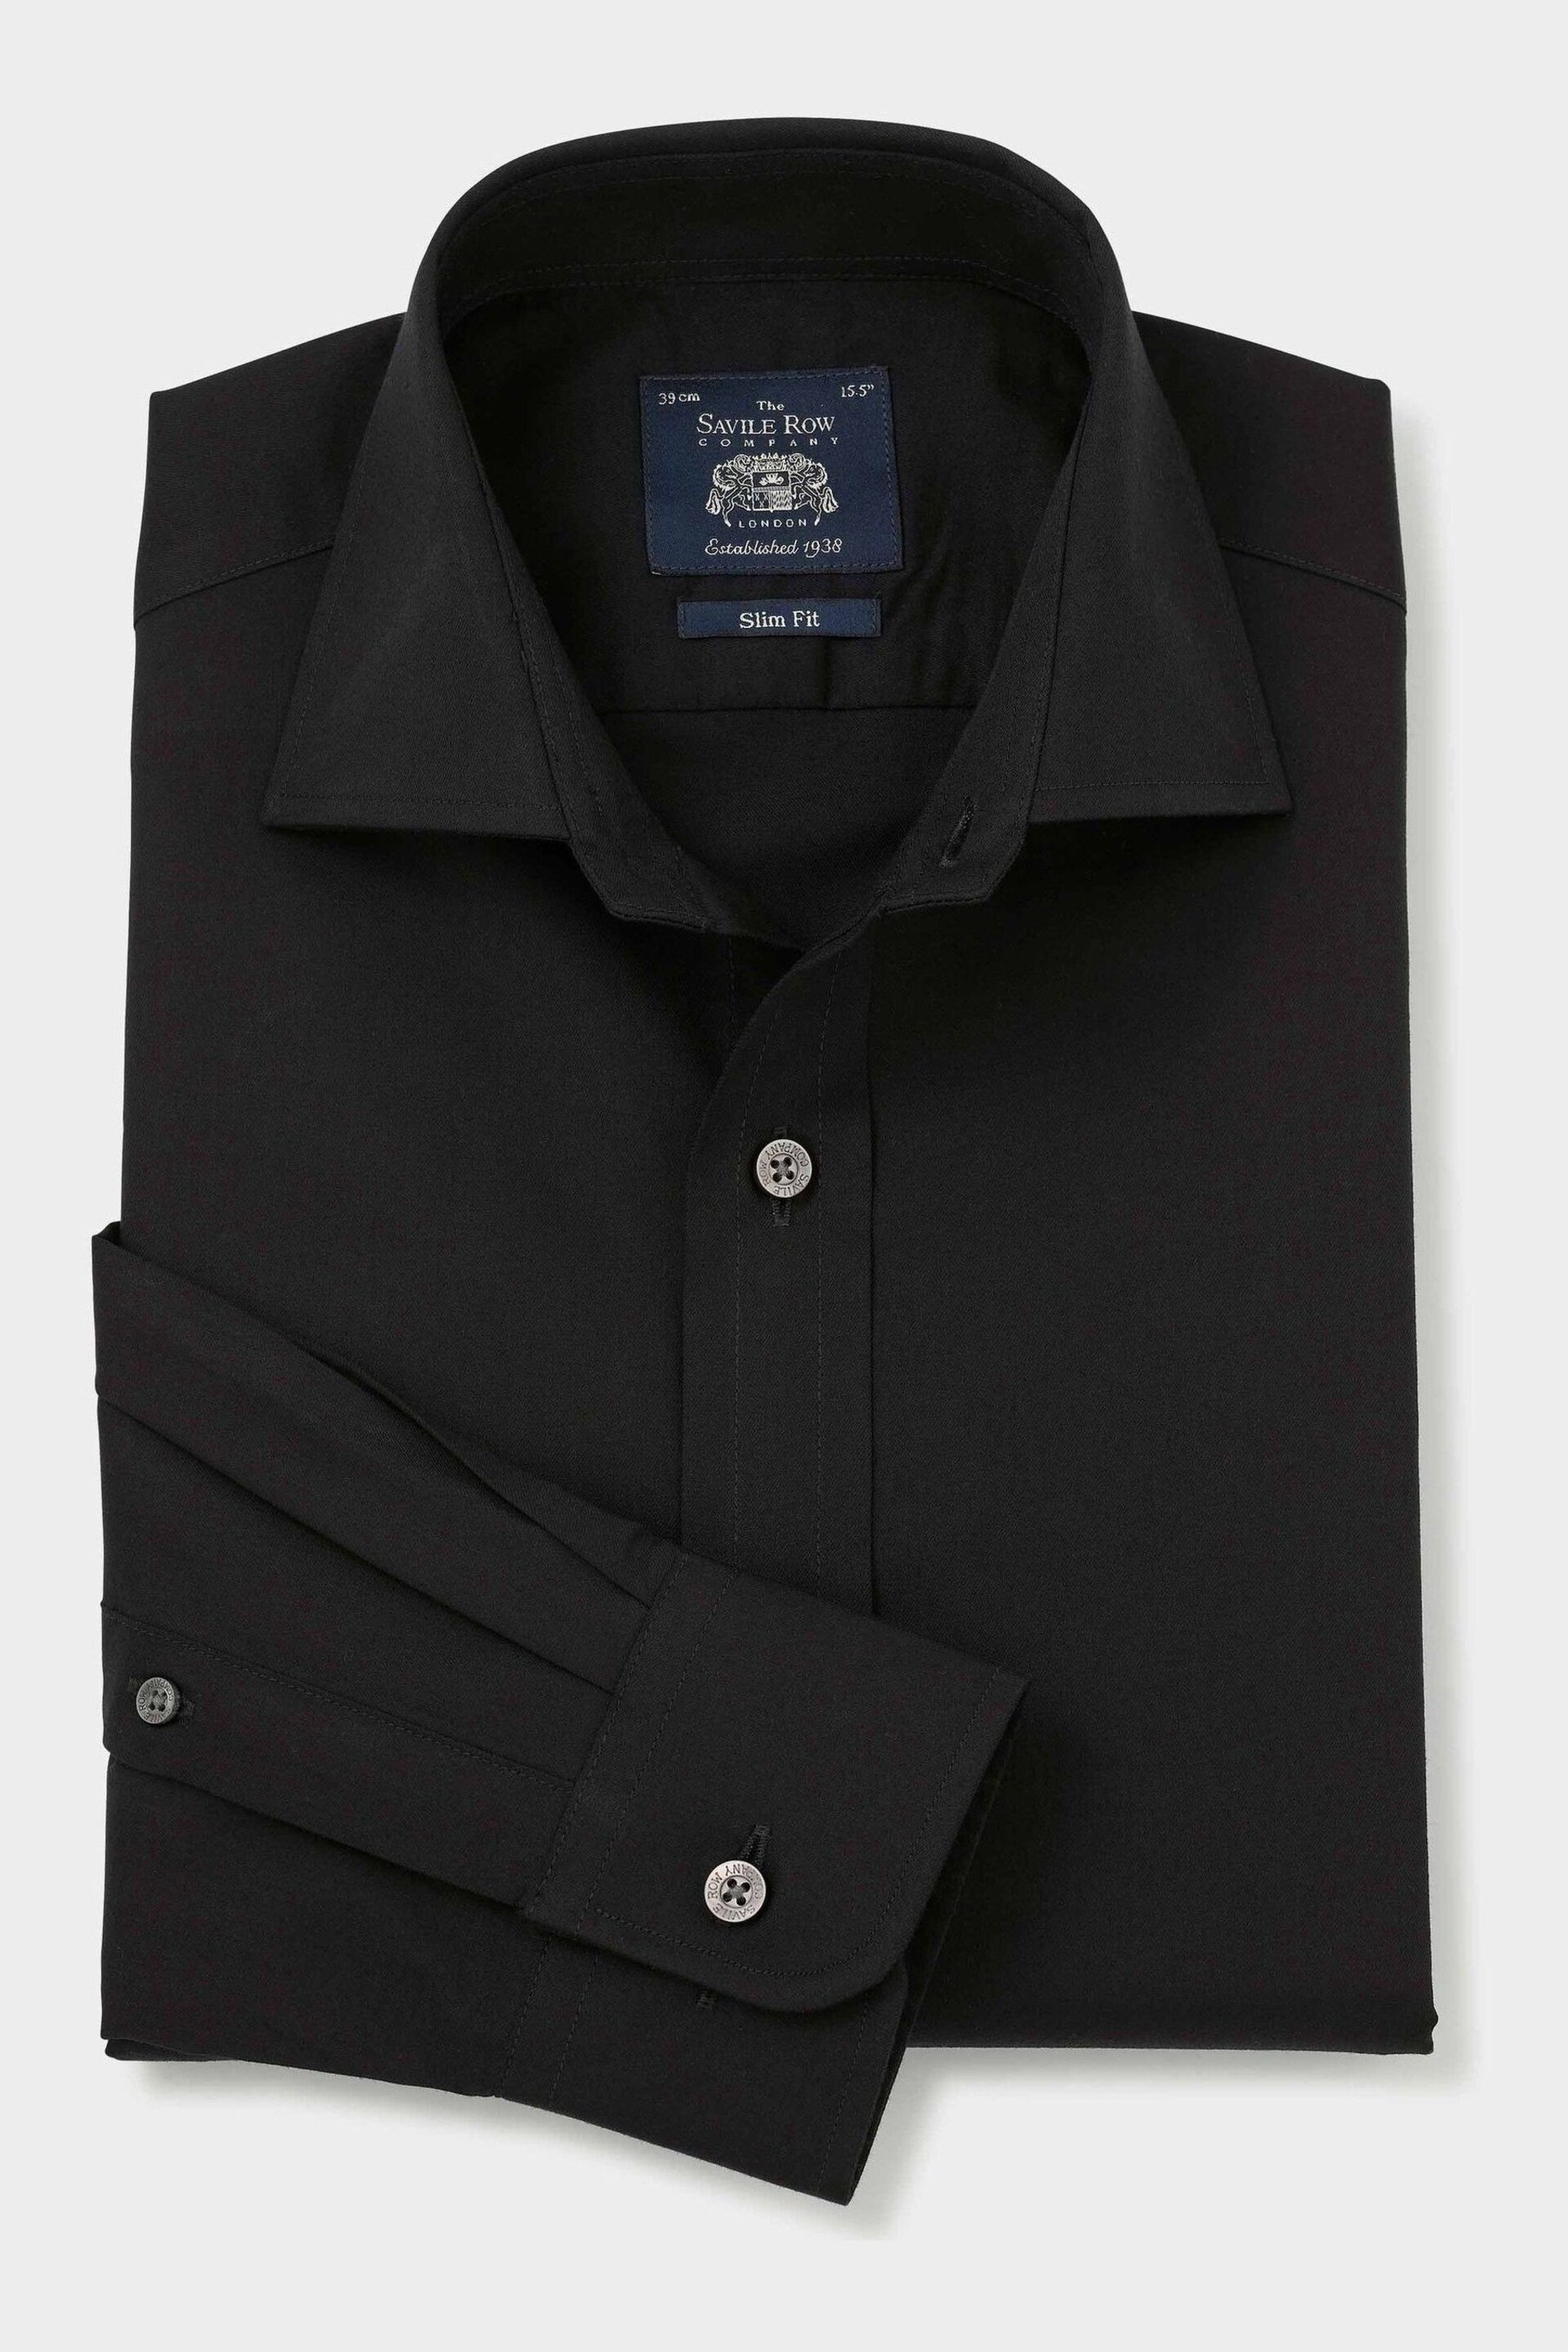 Savile Row Company Fine Twill Slim Single Cuff Formal Black Shirt - Image 3 of 5